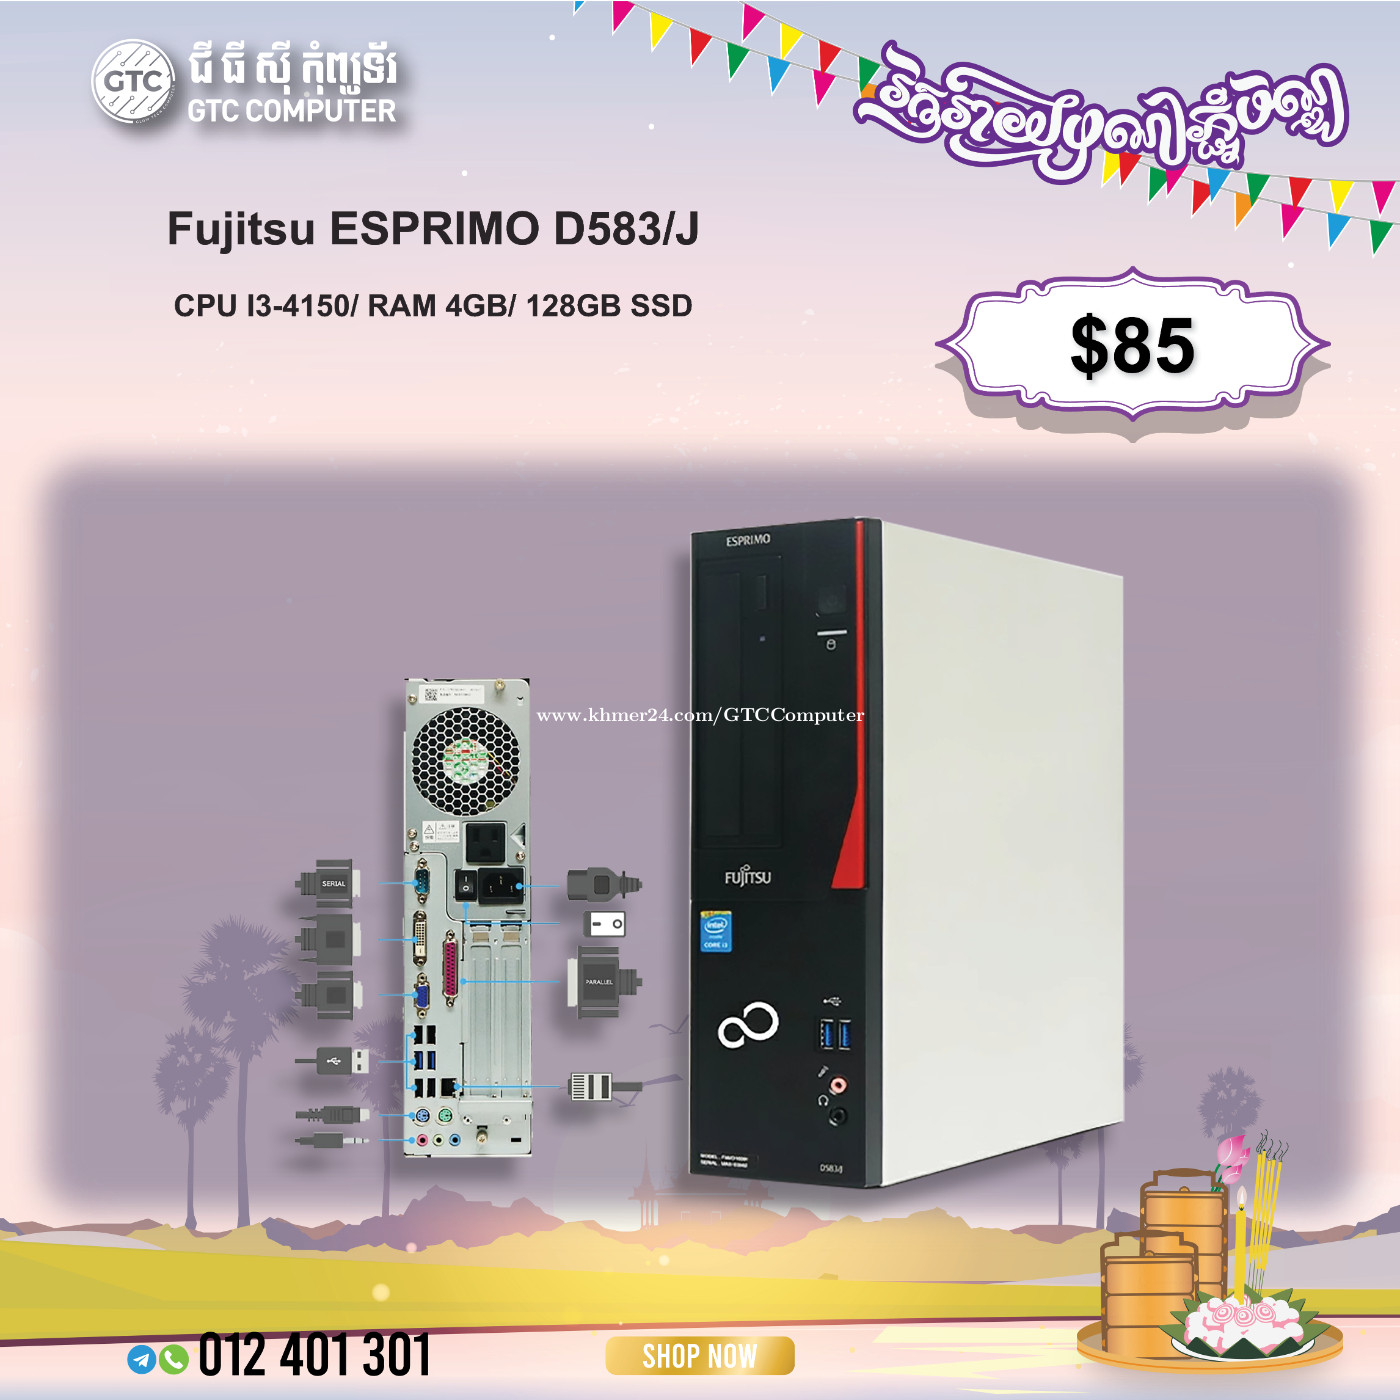 Fujitsu ESPRIMO D583/J Price $85.00 in Veal Vong, Cambodia - GTC ...